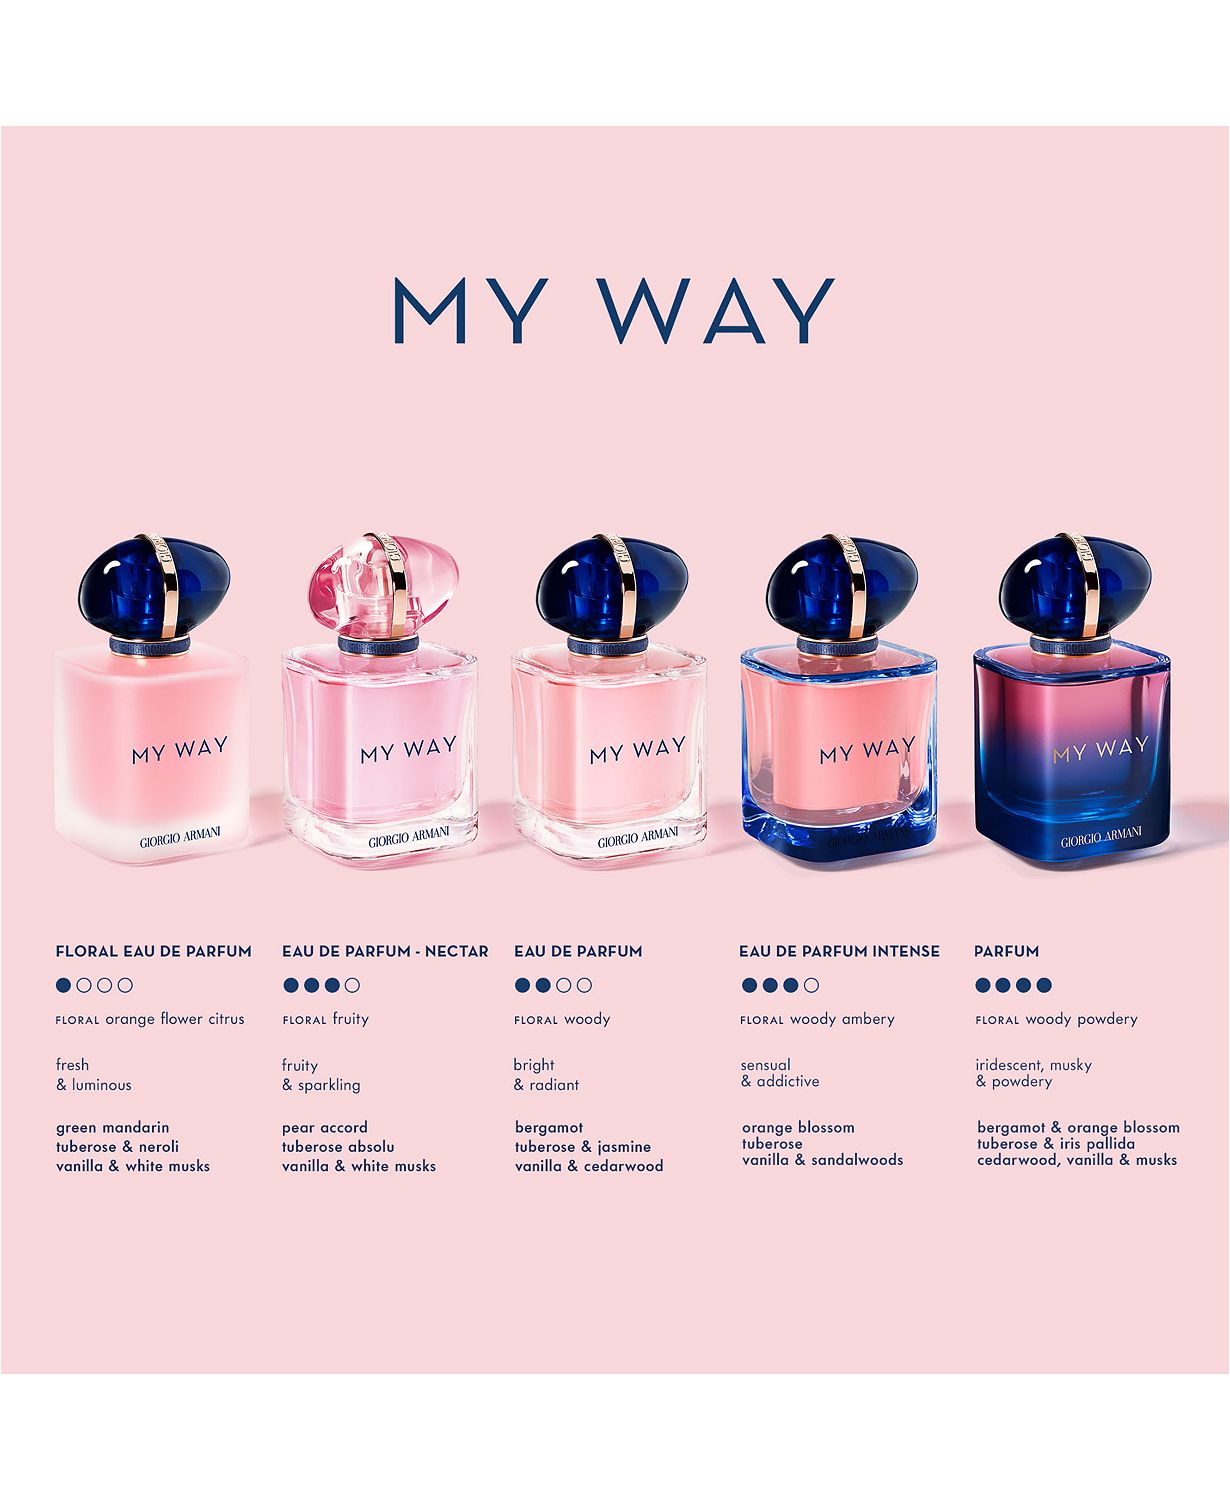 My Way Eau de Parfum Nectar, 3 oz.